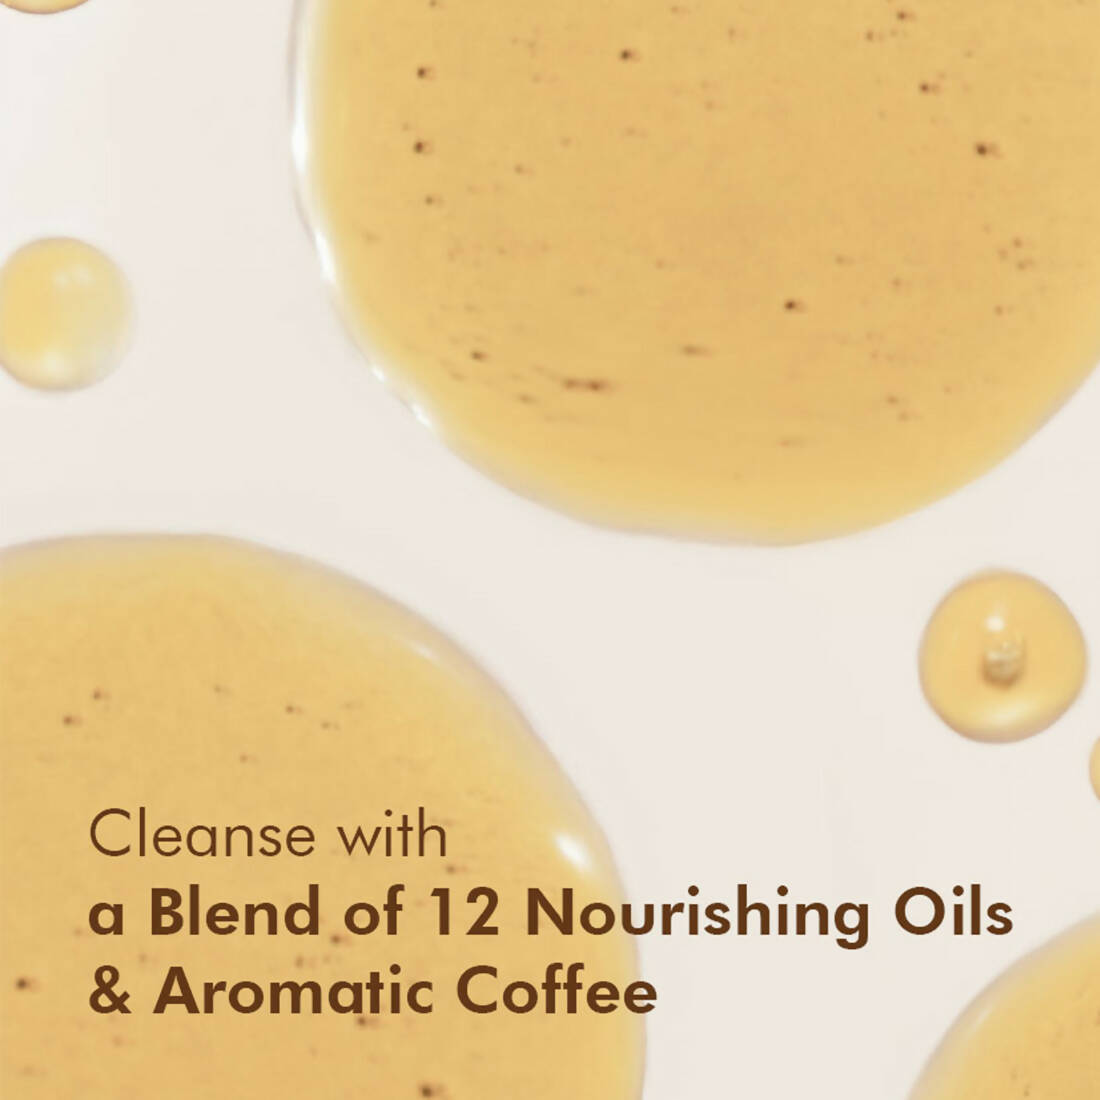 mCaffeine Coffee Shower Oil (Deep moisturization for soft skin) - Distacart